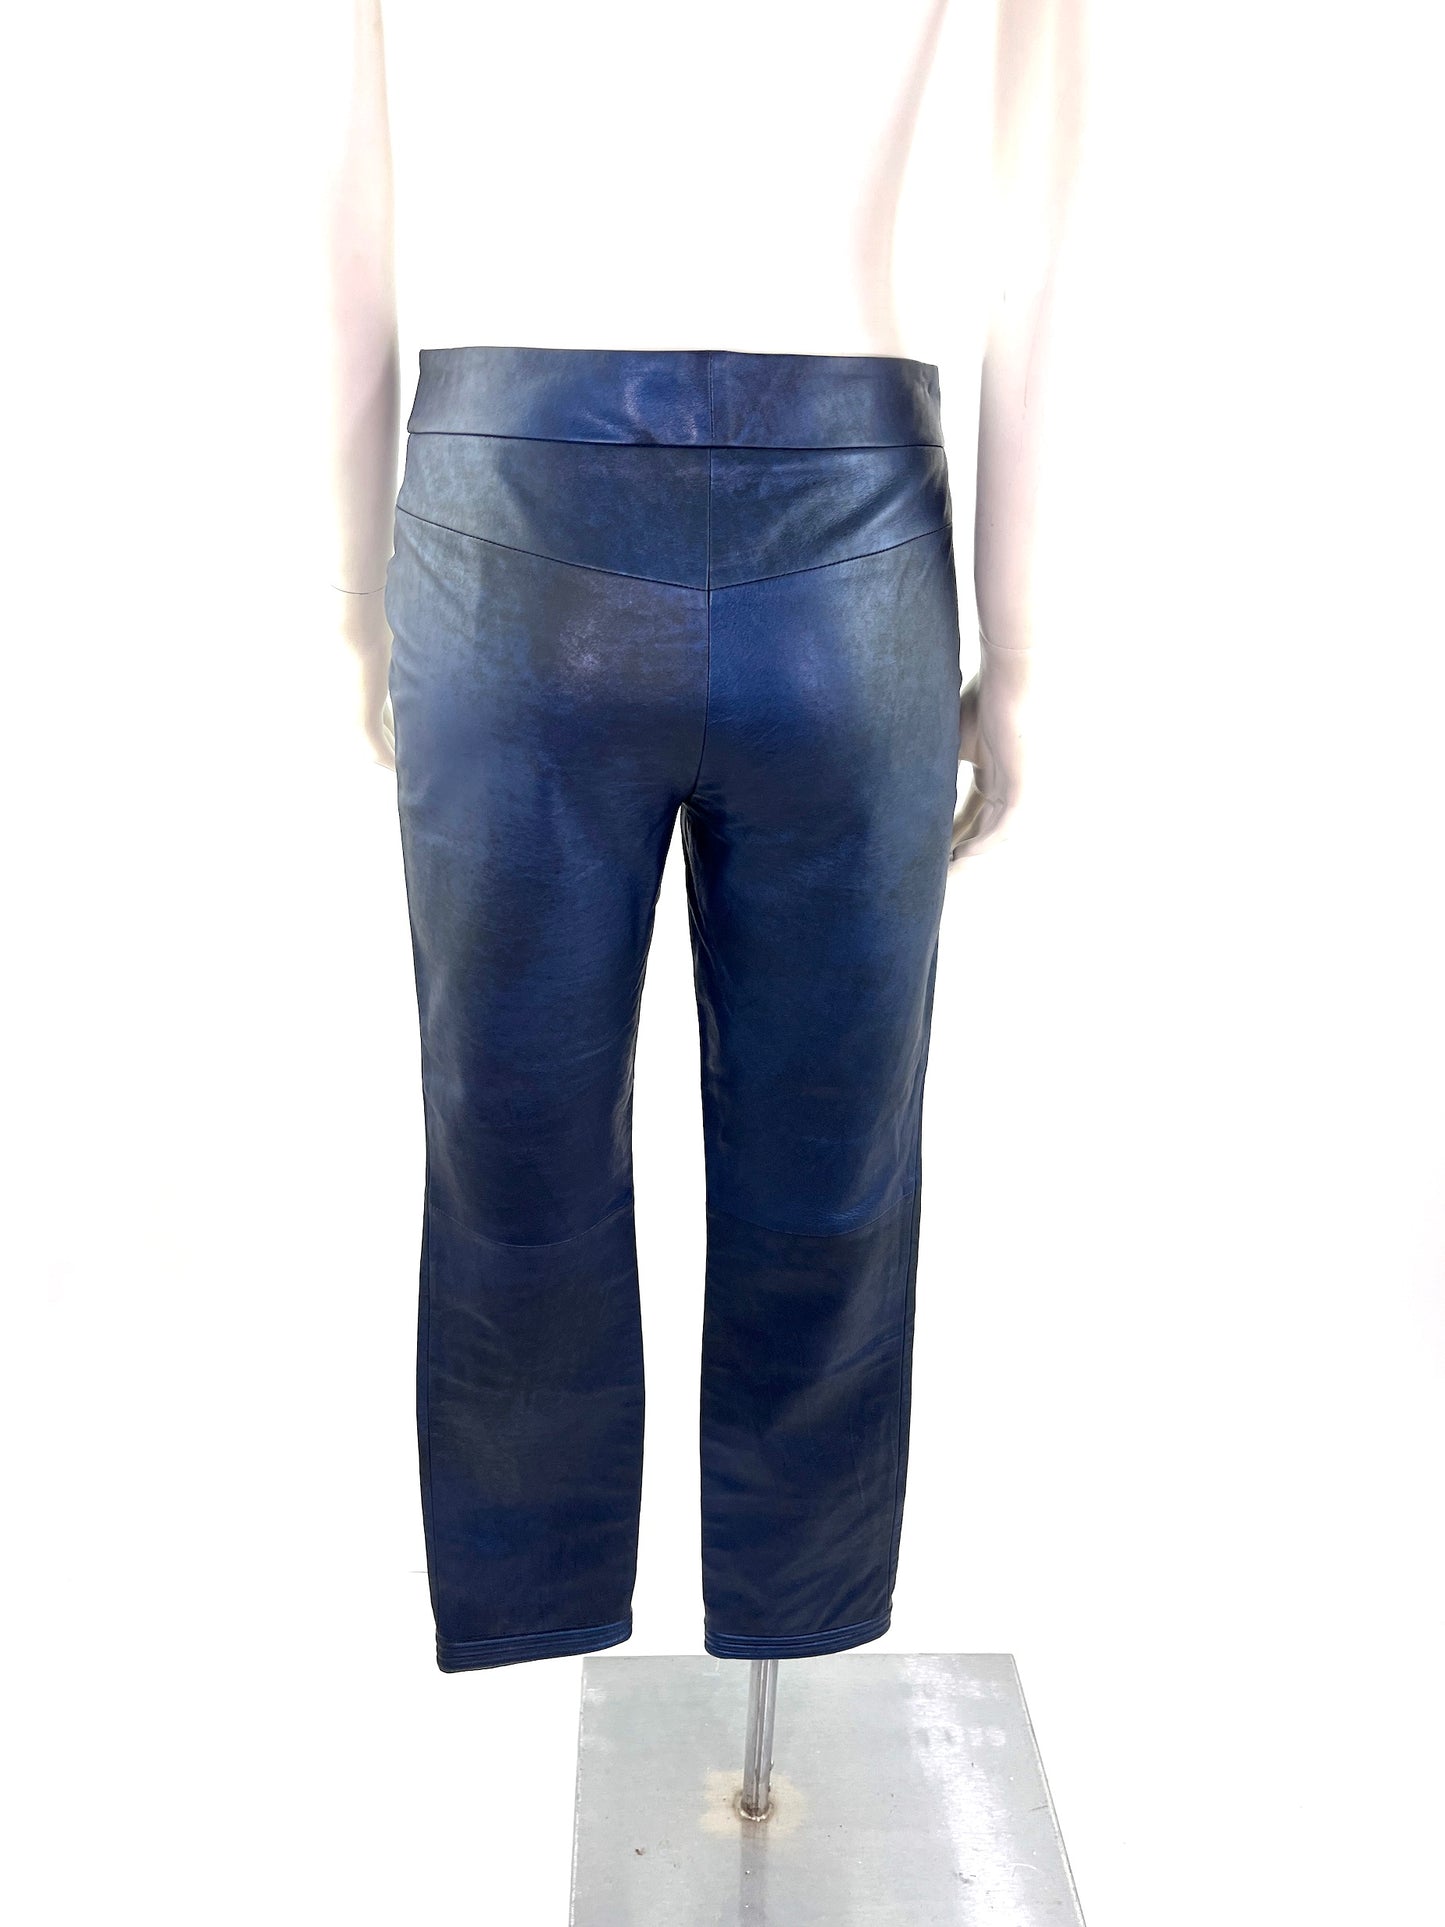 CHANEL Navy Blue Leather Straight Leg Pants 36 2